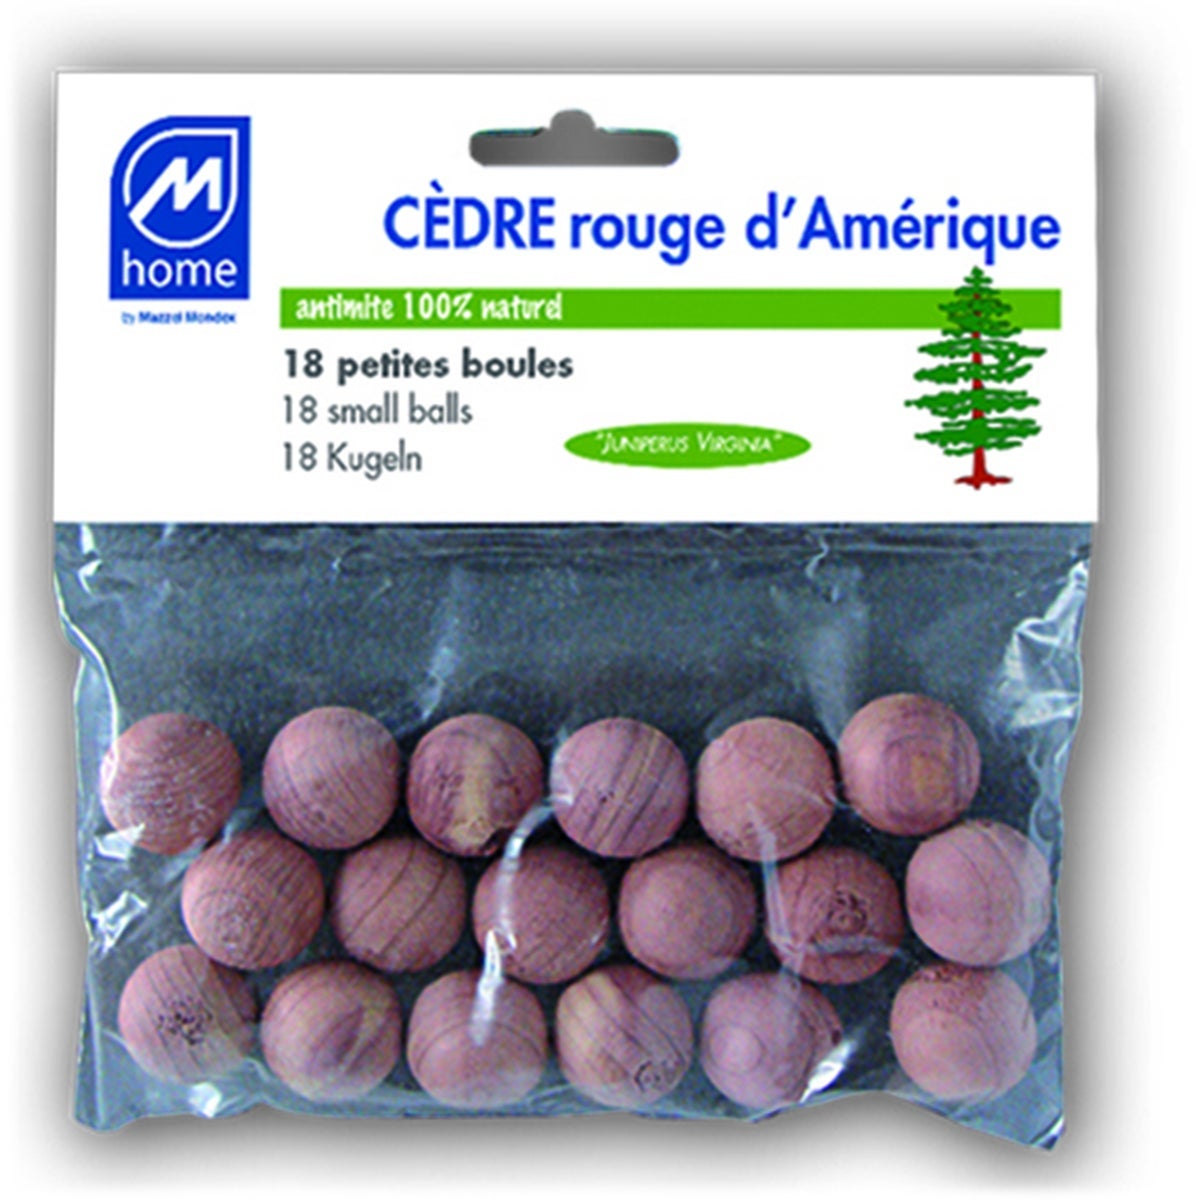 Boules Cèdre rouge Anti-mite x18